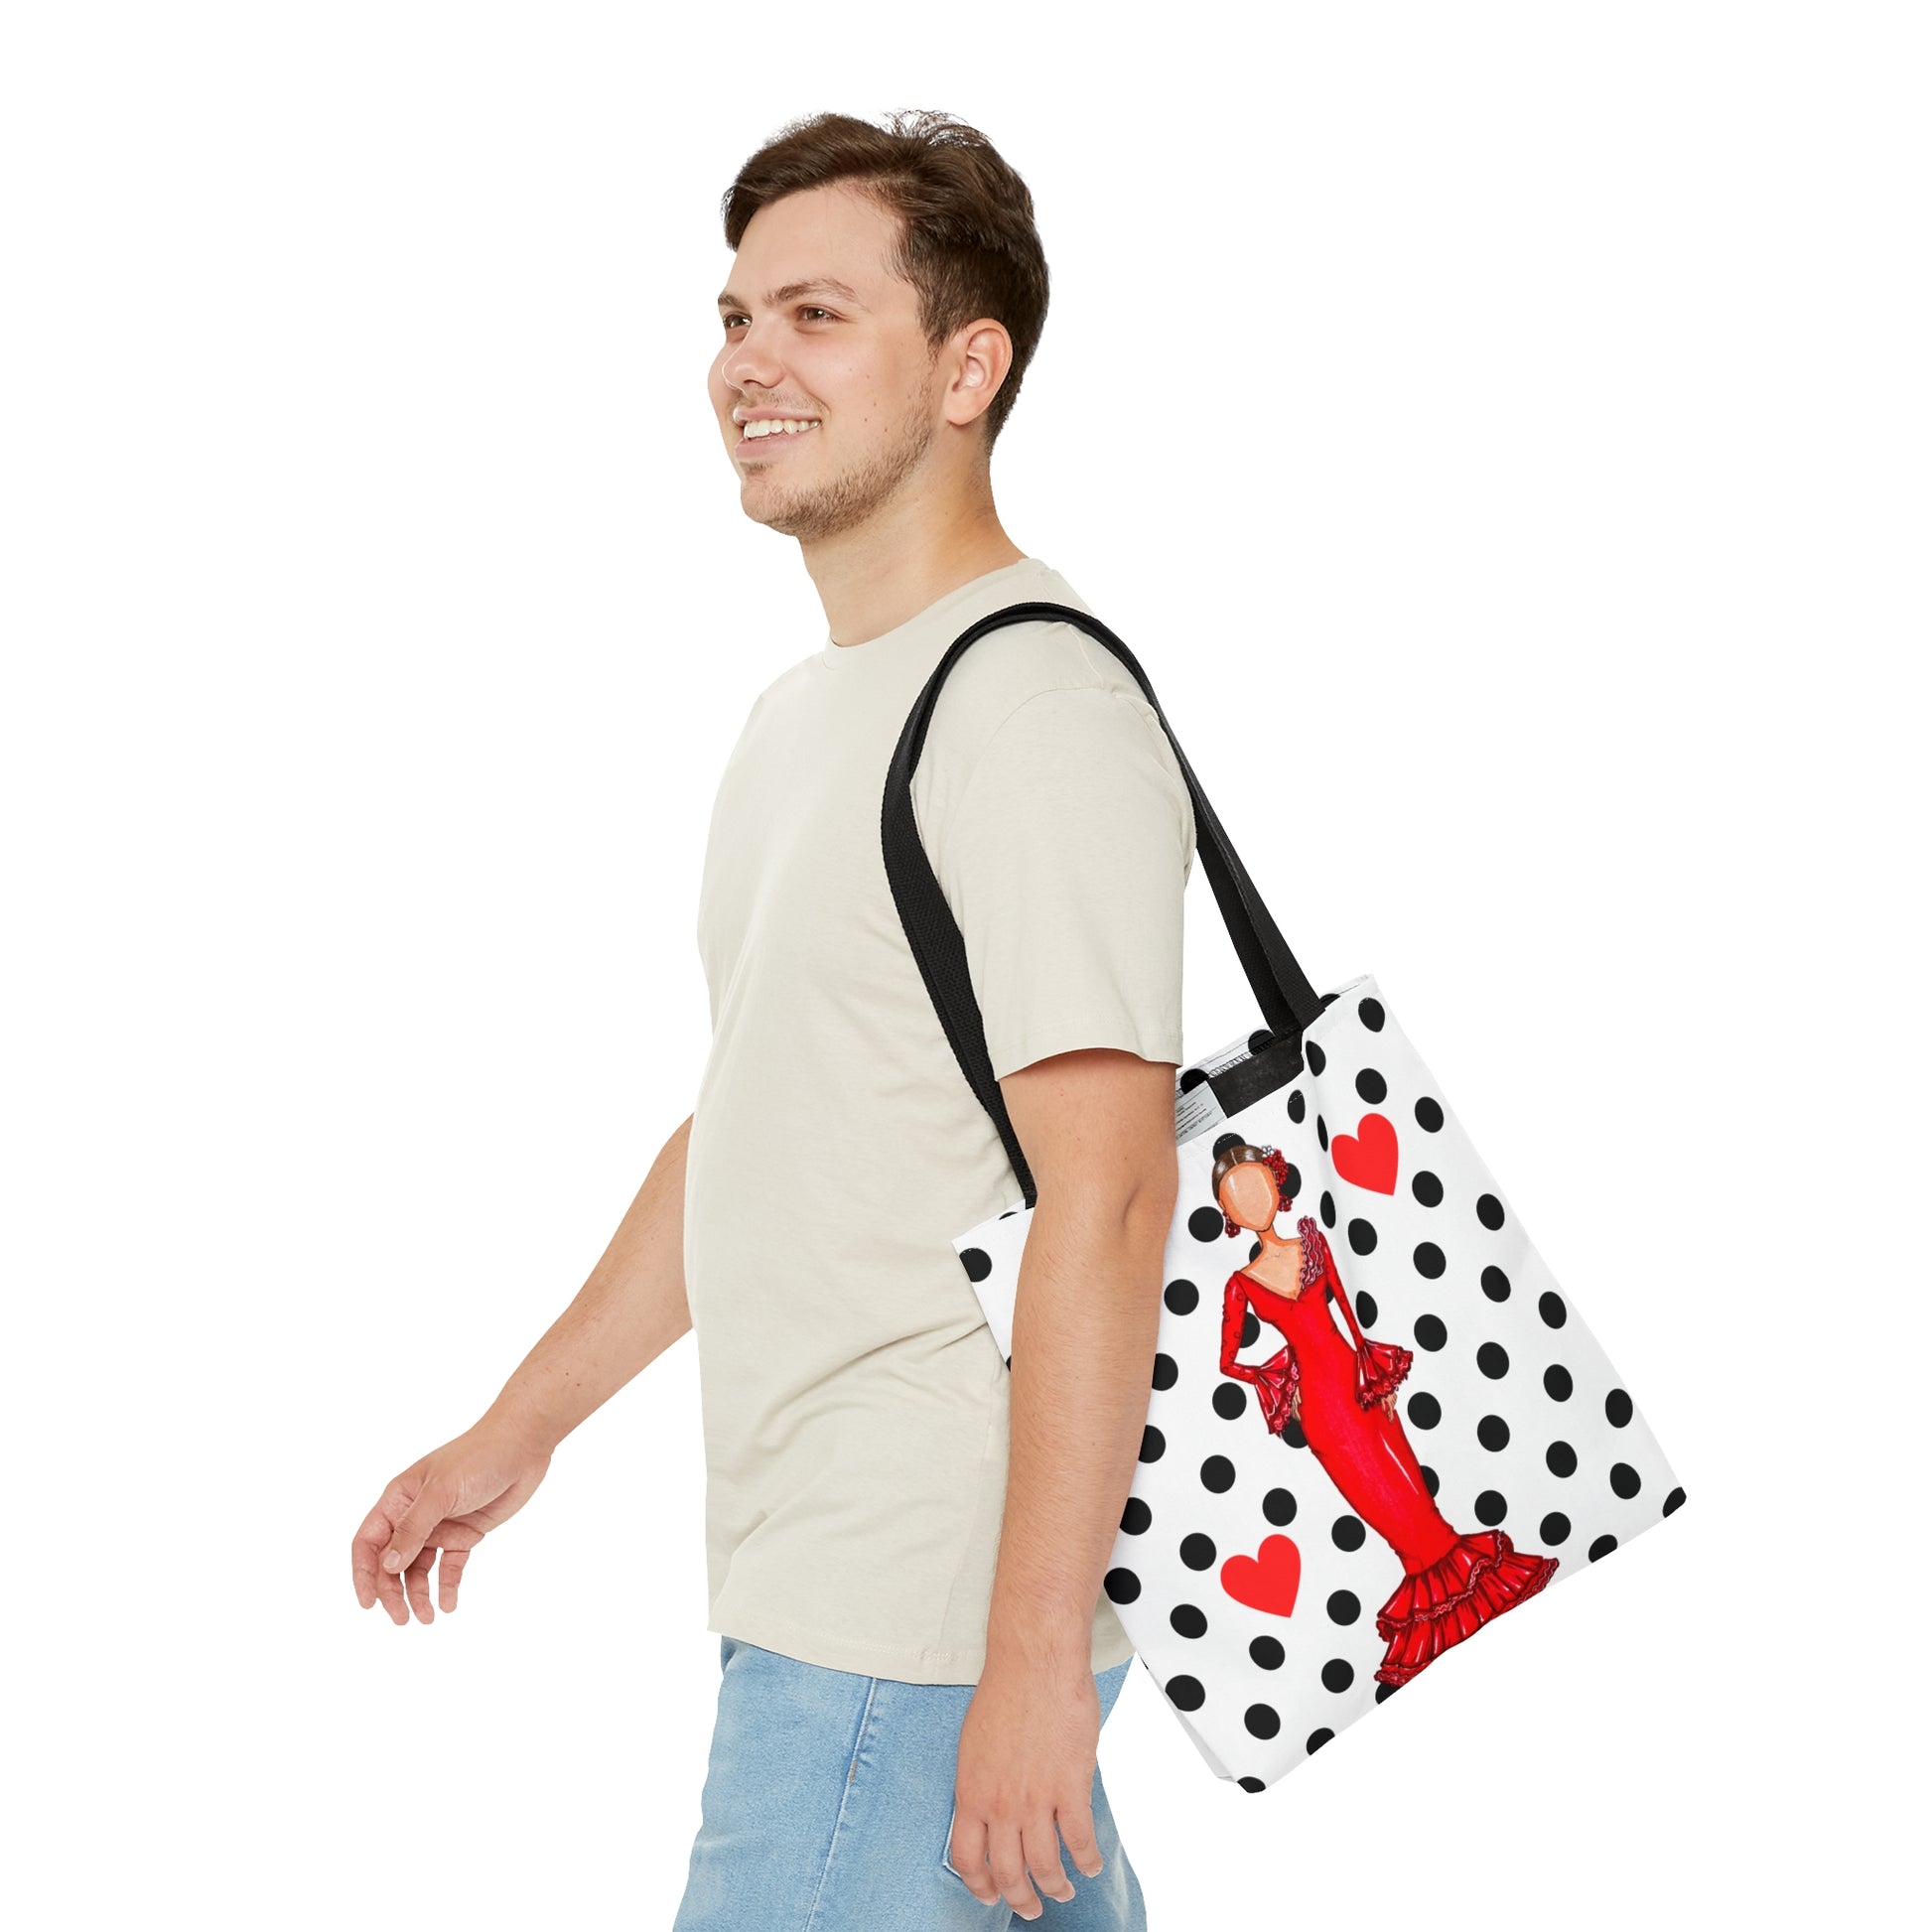 a man walking with a polka dot bag